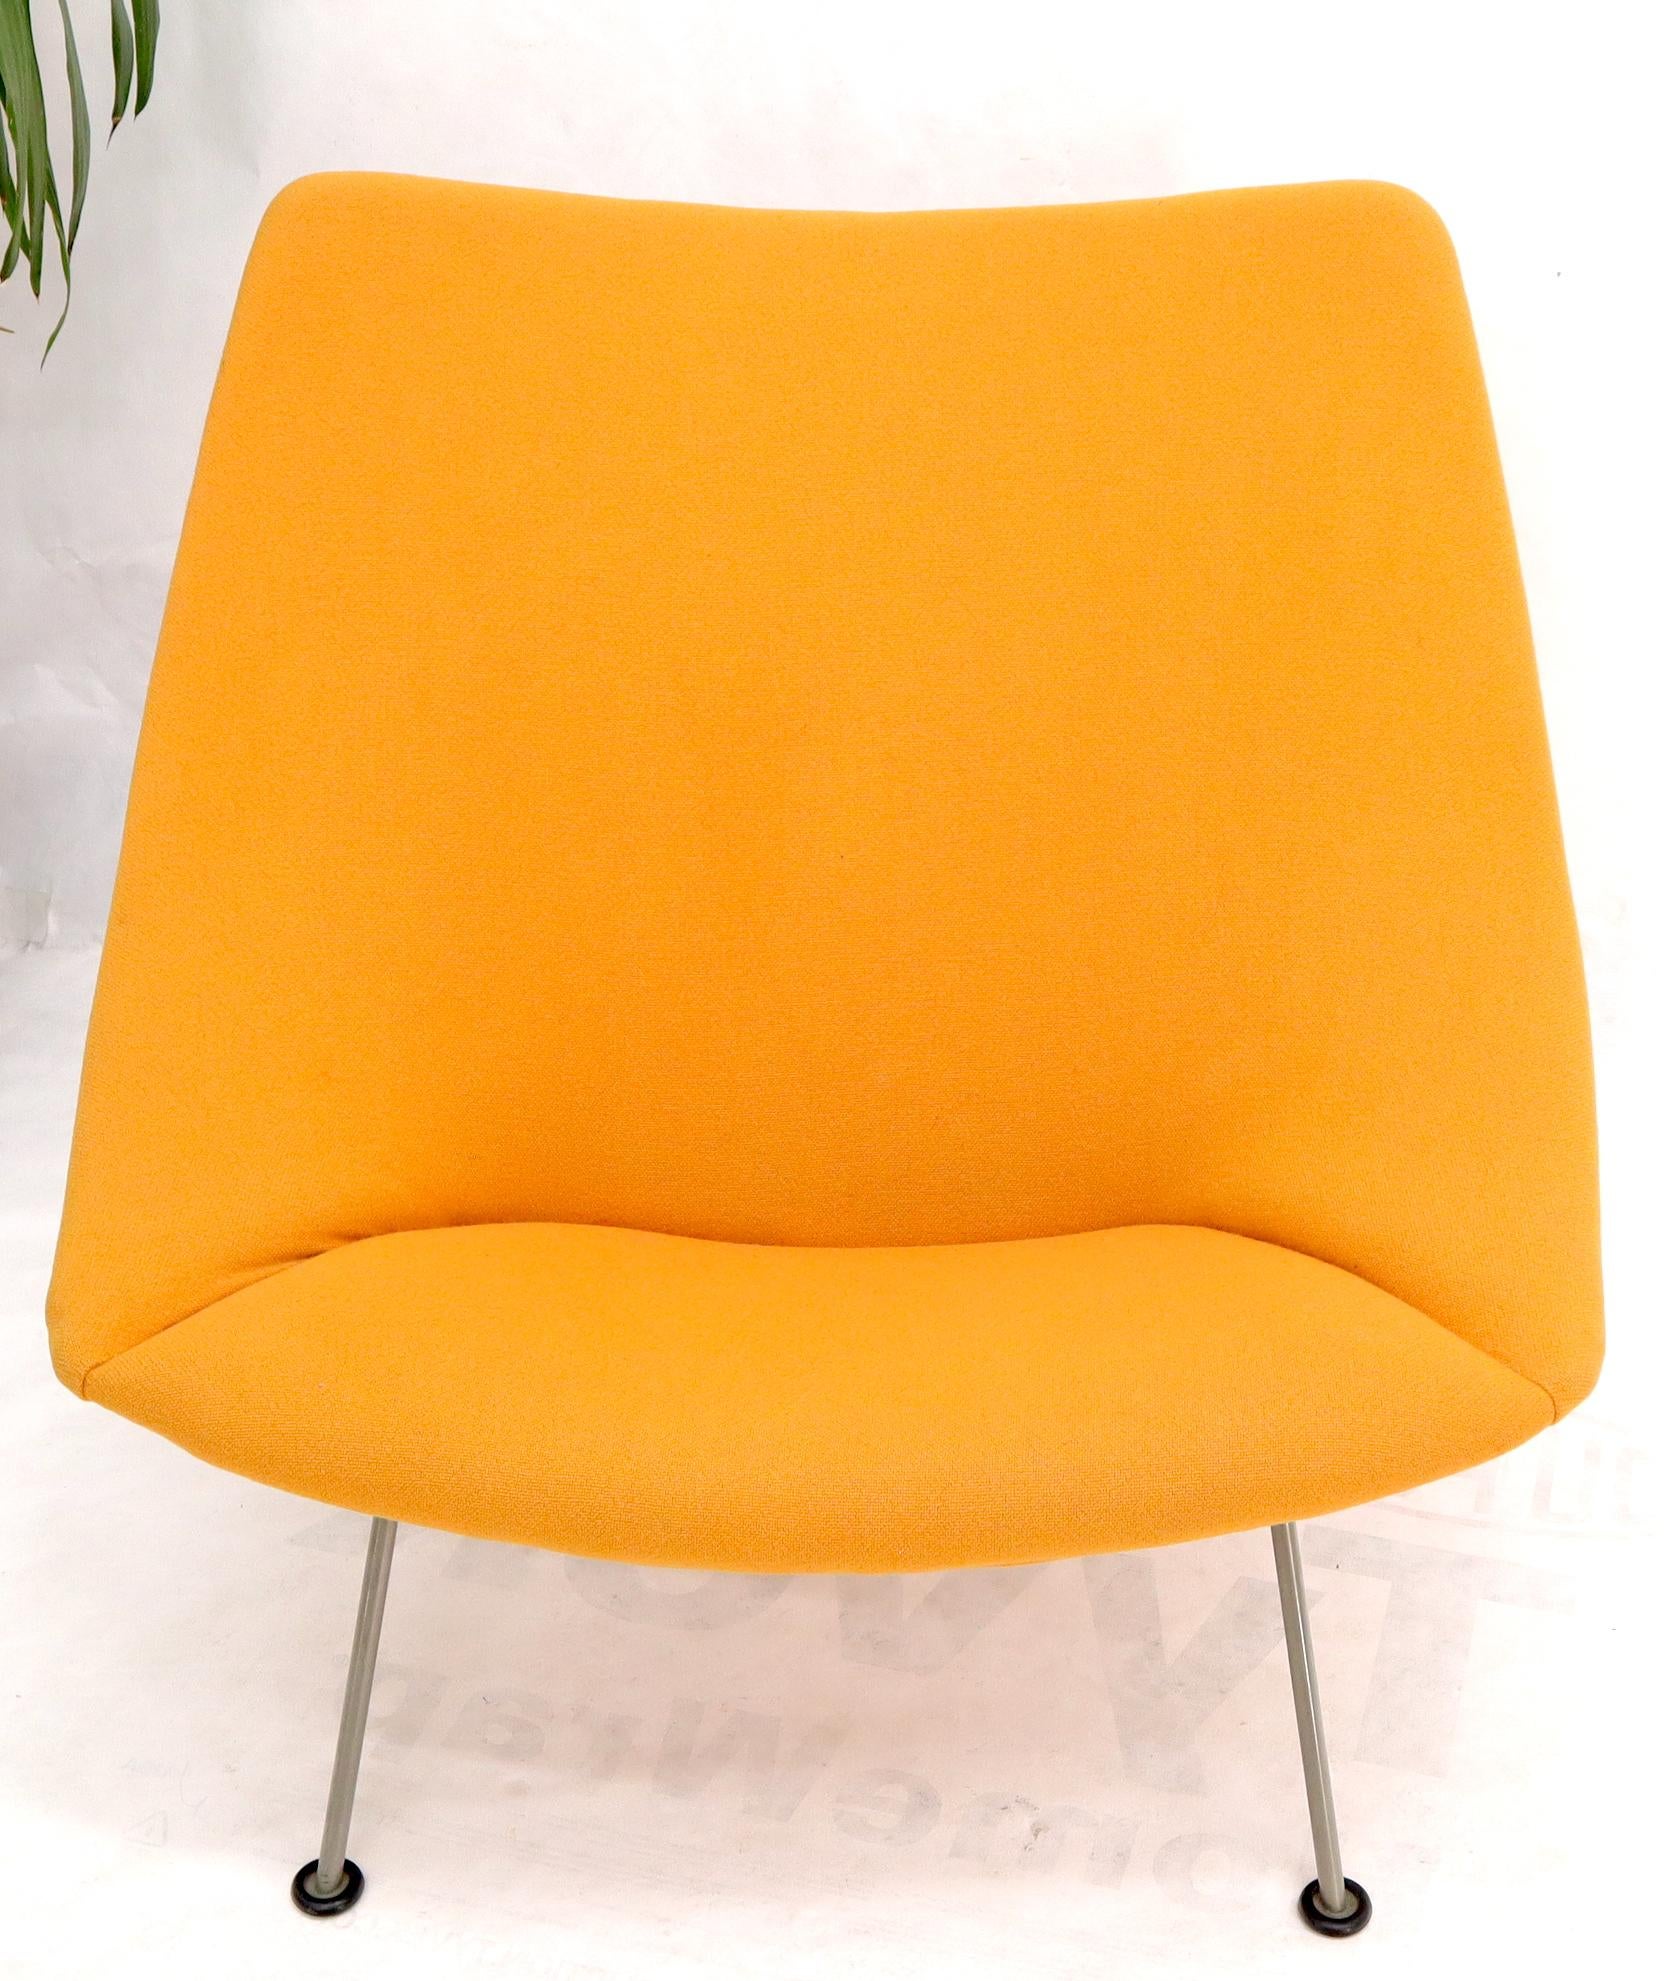 Danish Pierre Paulin Artifort Wool Upholstery Oyster Chair Orange Wool Upholstery For Sale